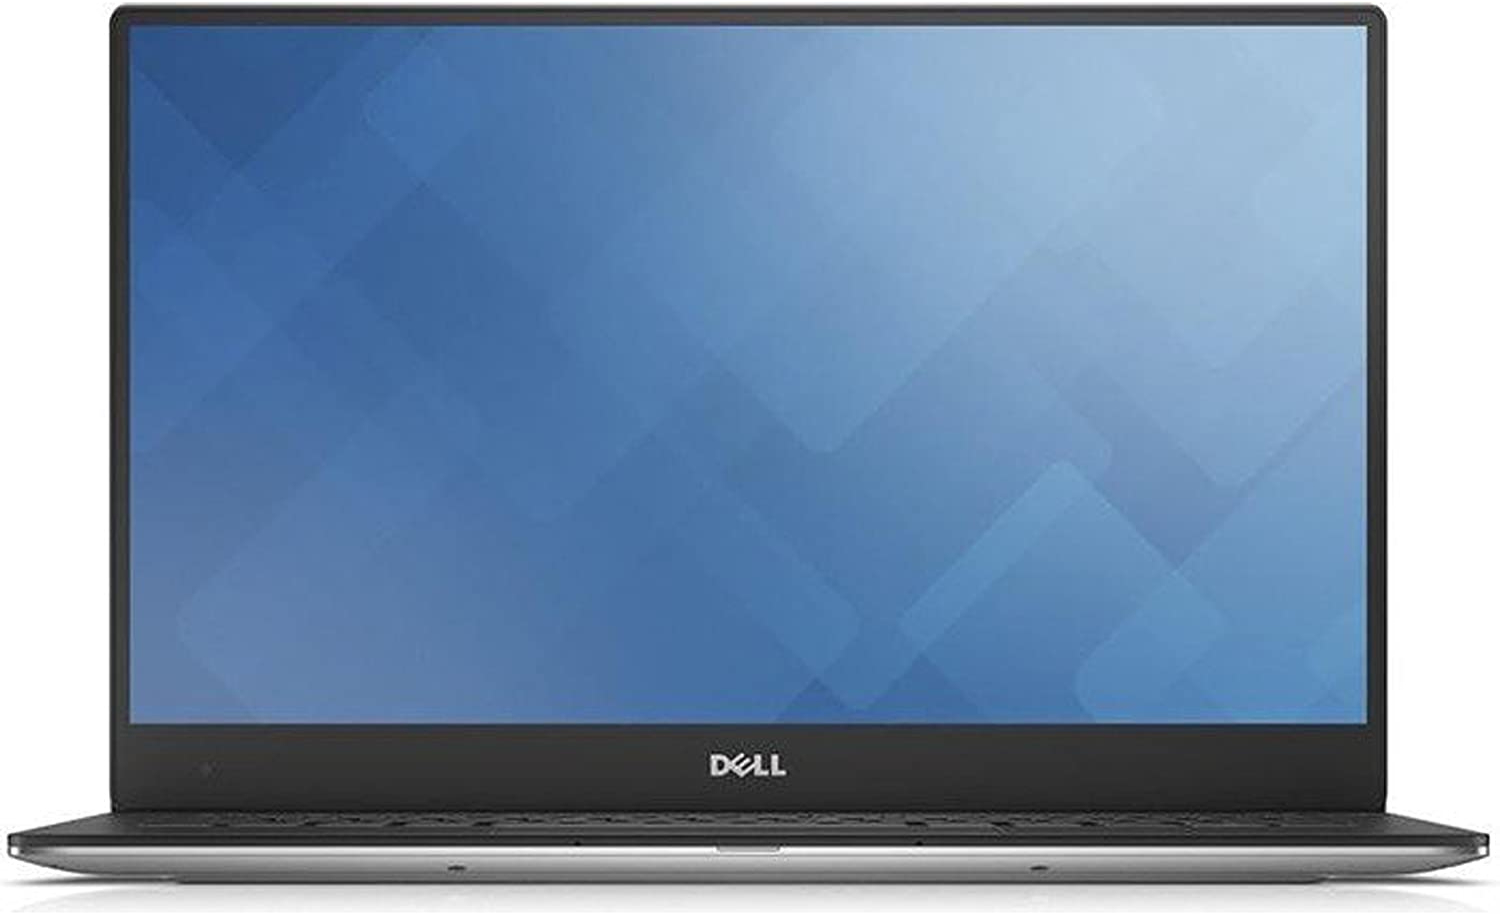 Dell XPS 13 9350 Intel Core i7 6th Gen 8GB RAM 512GB SSD Windows 10 Home